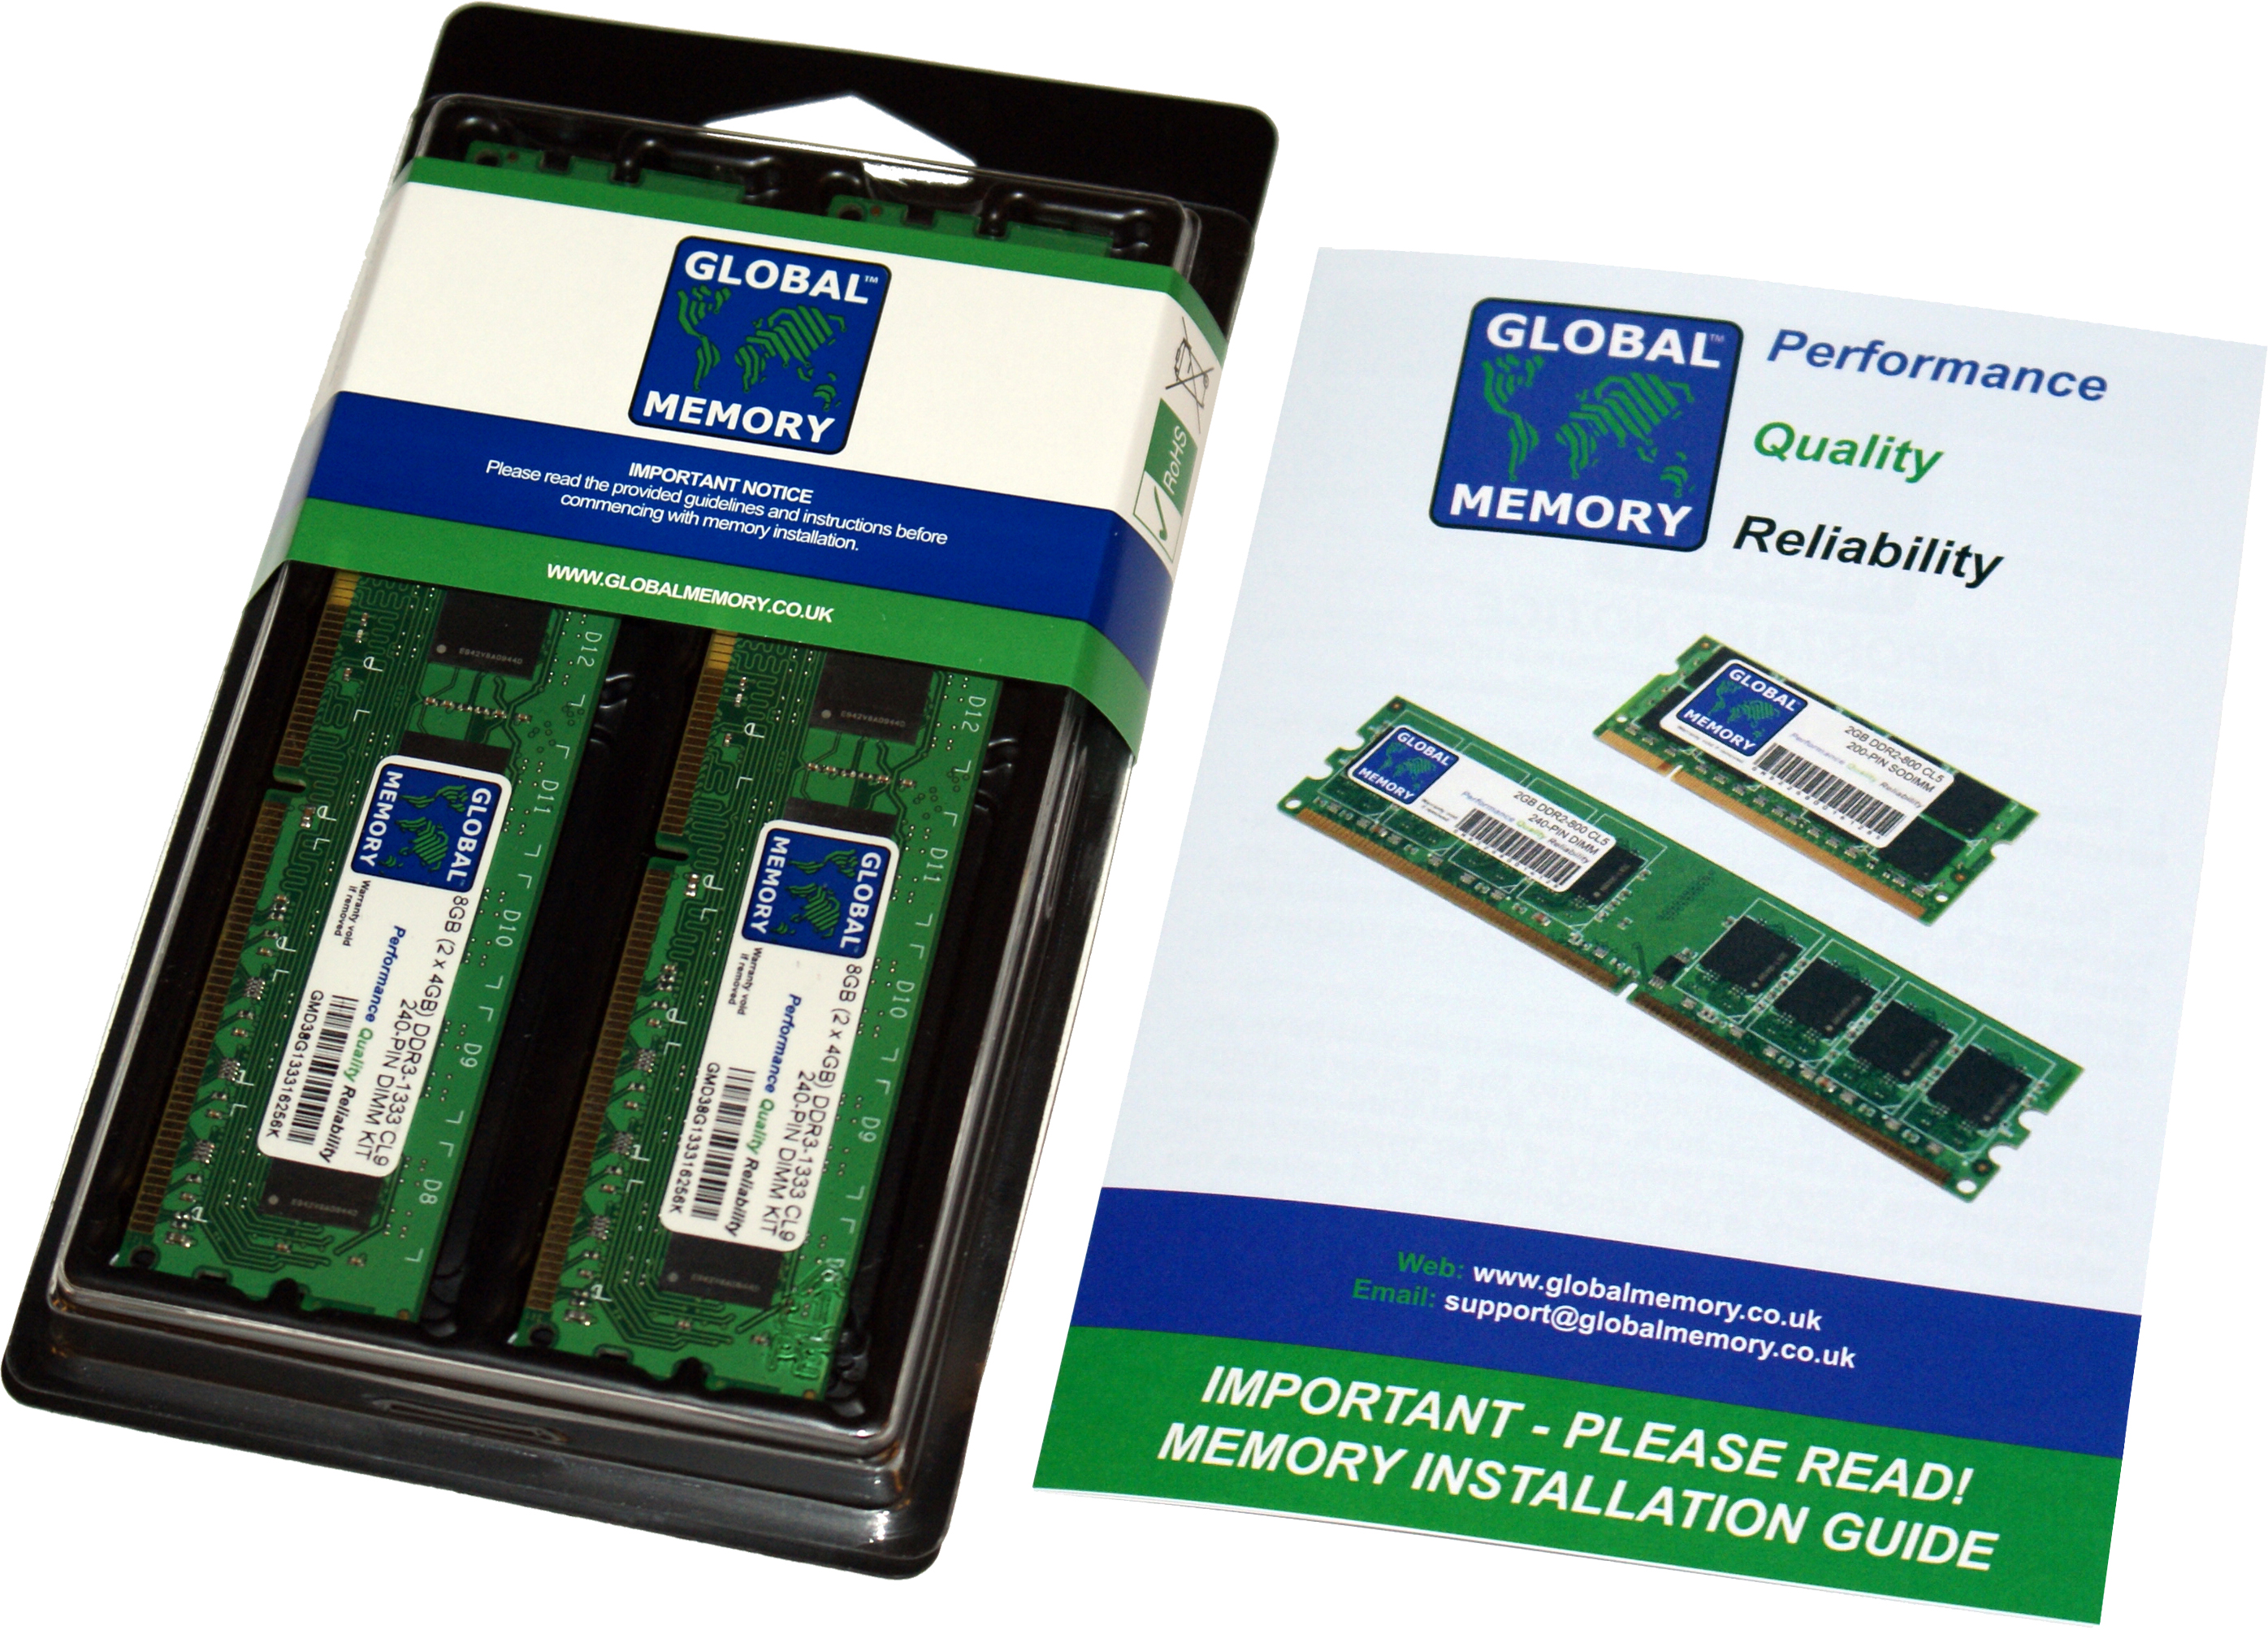 8GB (2 x 4GB) DDR4 2400MHz PC4-19200 288-PIN DIMM MEMORY RAM KIT FOR PC DESKTOPS/MOTHERBOARDS